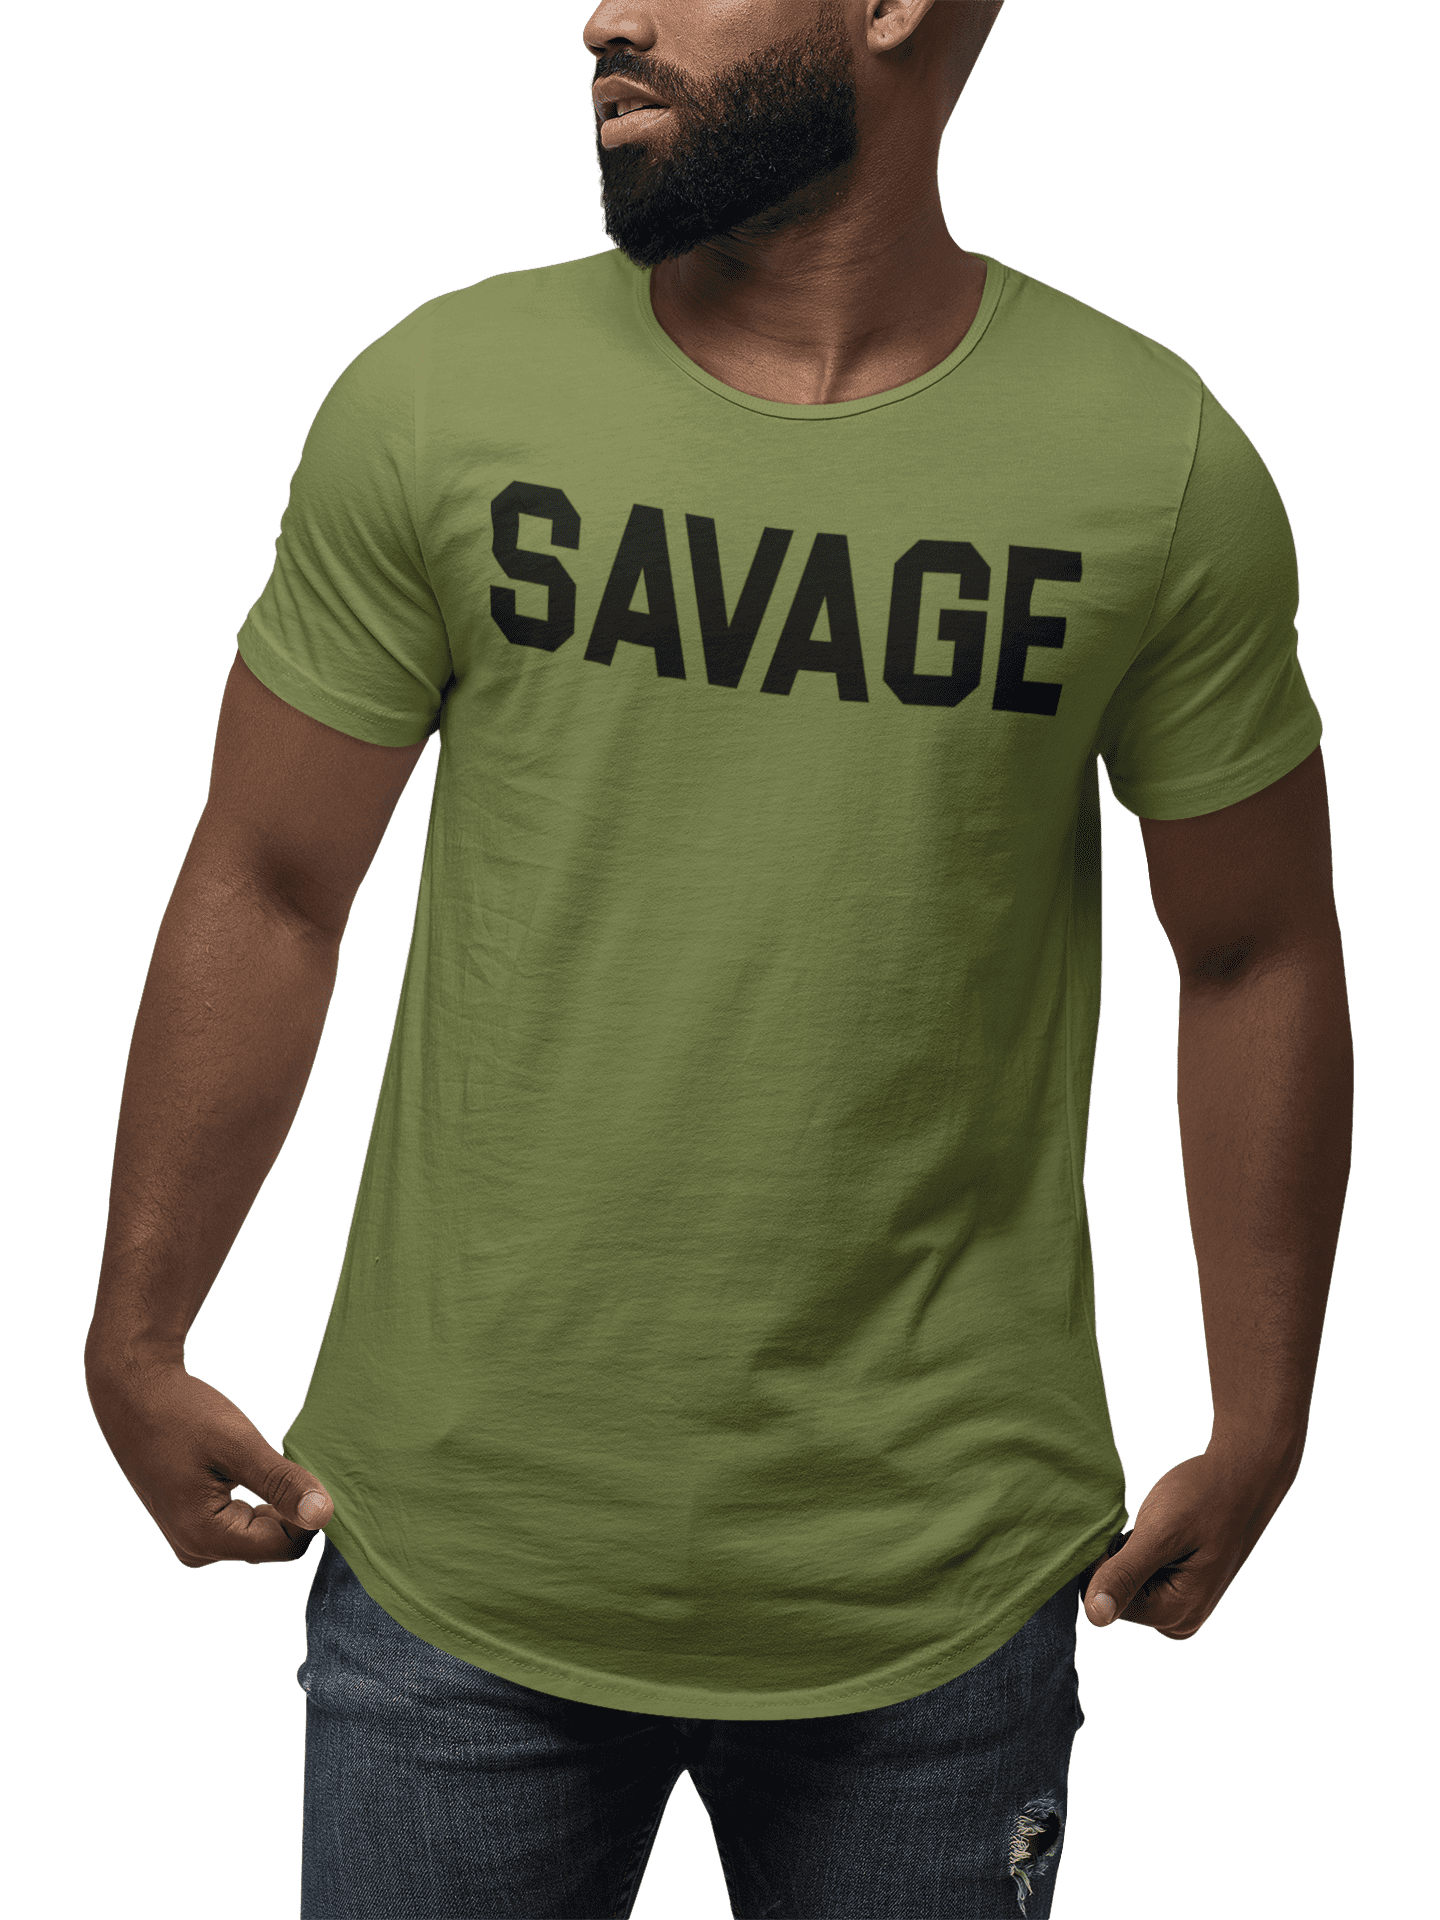 ShirtBANC SAVAGE Mens Dropcut Shirt Savagely Motivated Bold Attitude ...